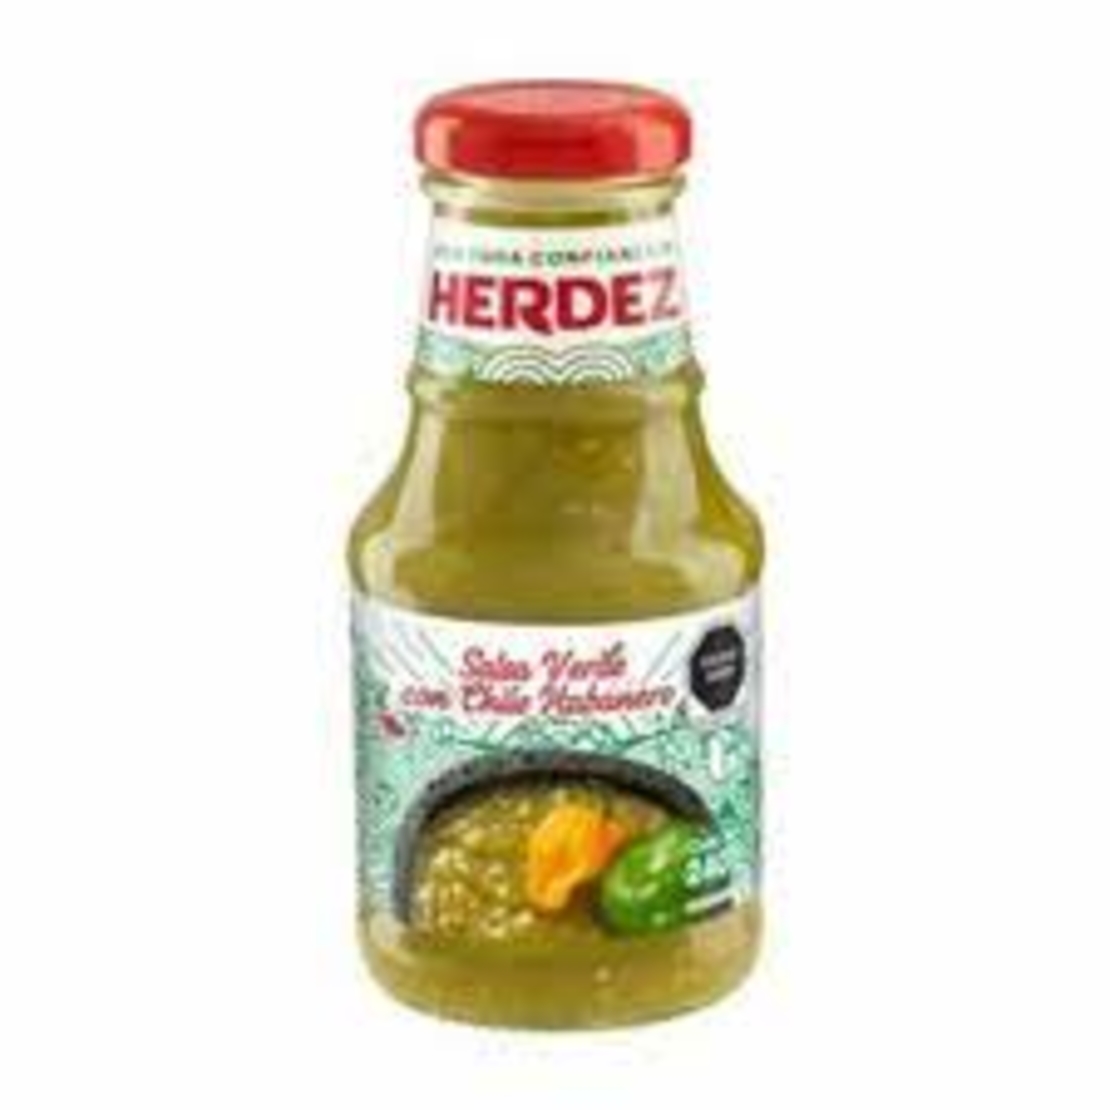 Herdez- salsa varde picante 240g'